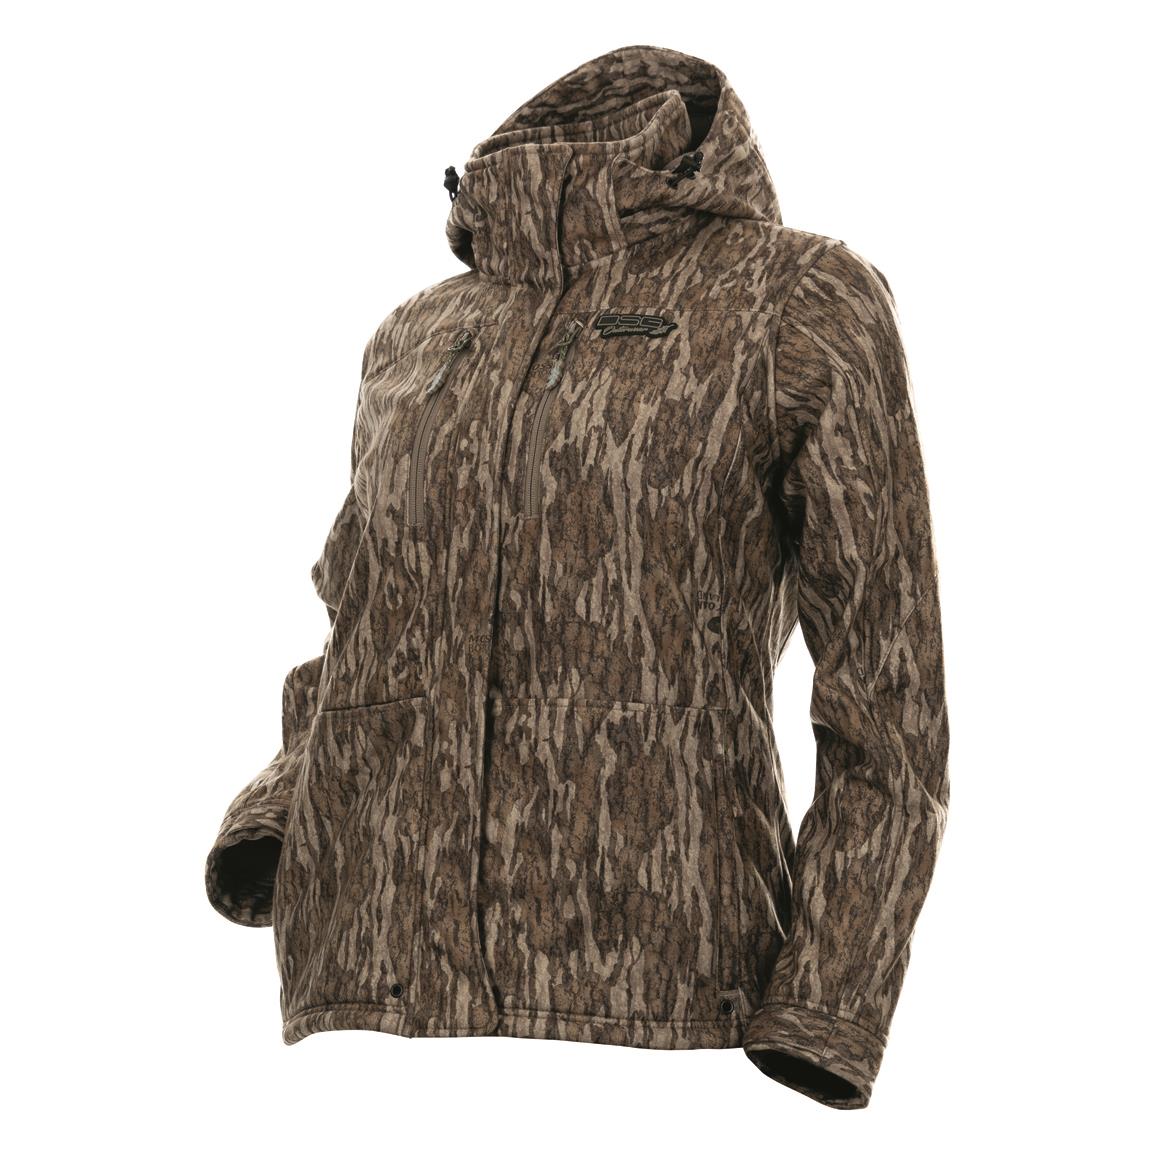 DSG Outerwear Women's Ava 3.0 Camo Hunting Jacket, Mossy Oak Bottomland®